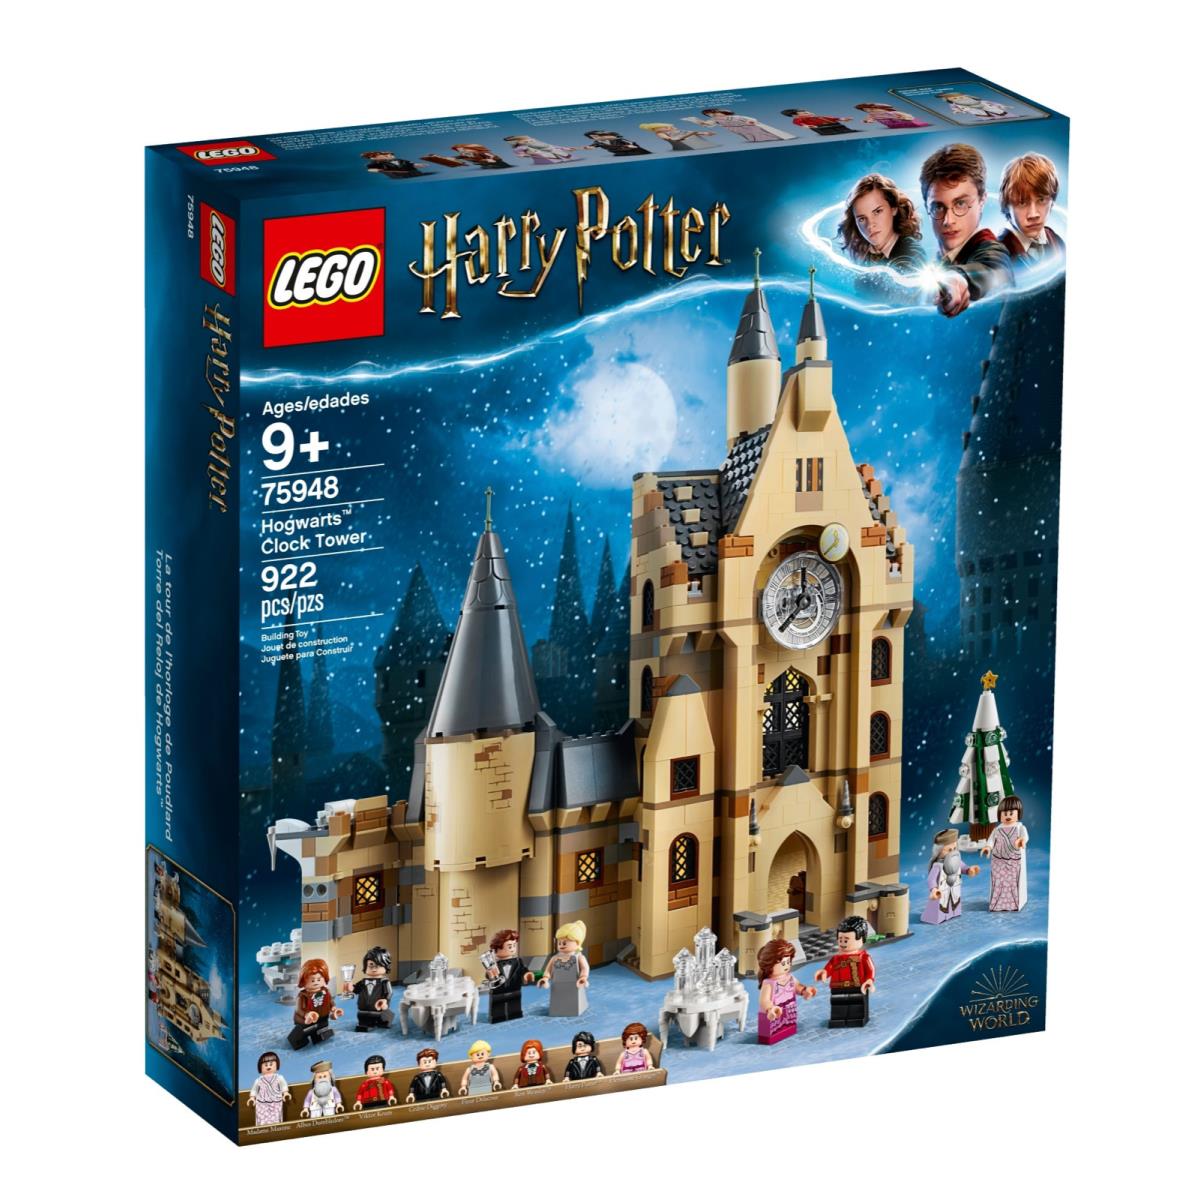 Lego Harry Potter Hogwarts Click Tower 75948 - Ships Immediately